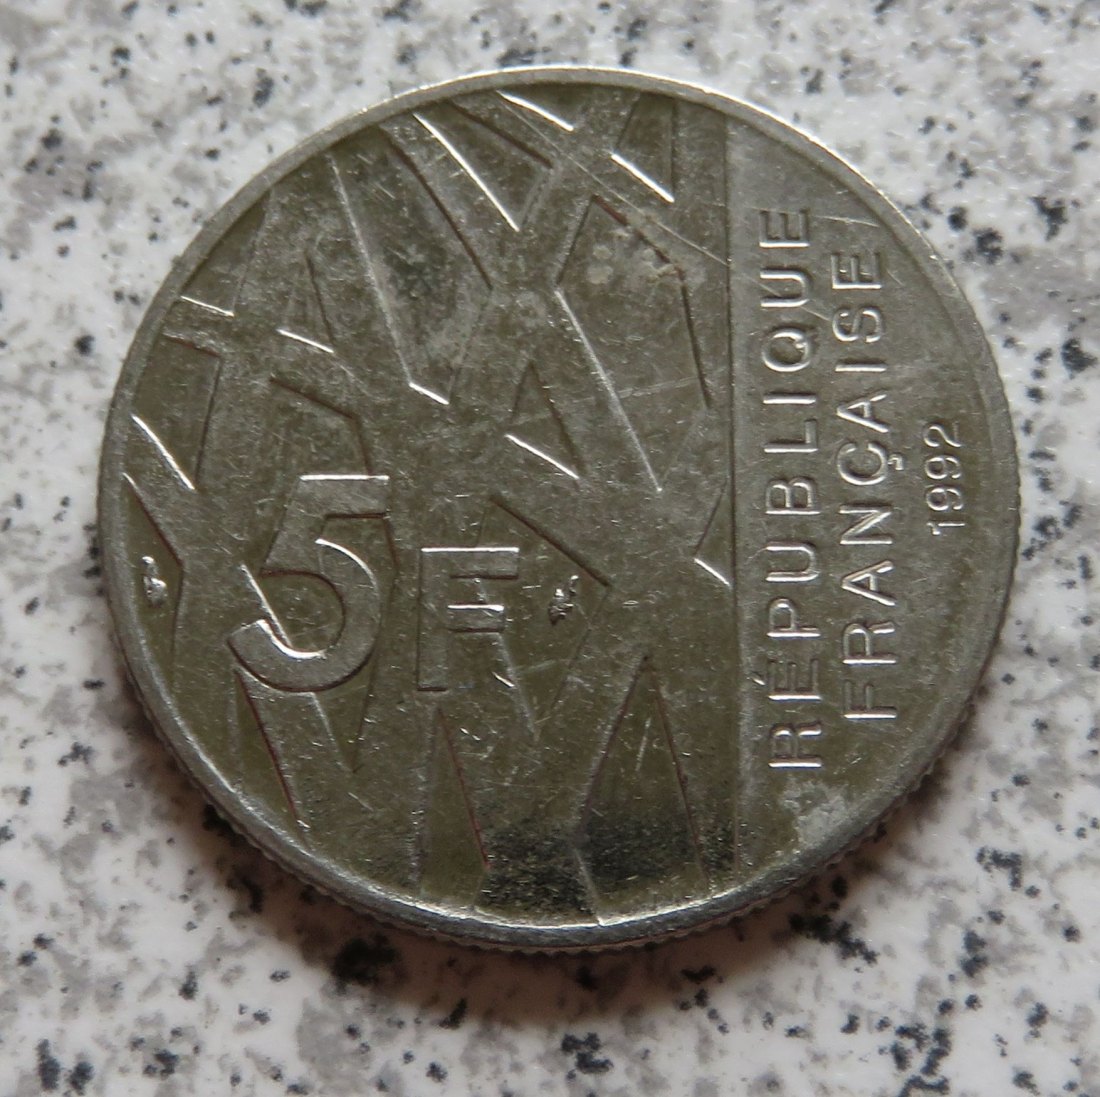  Frankreich 5 Francs 1992   